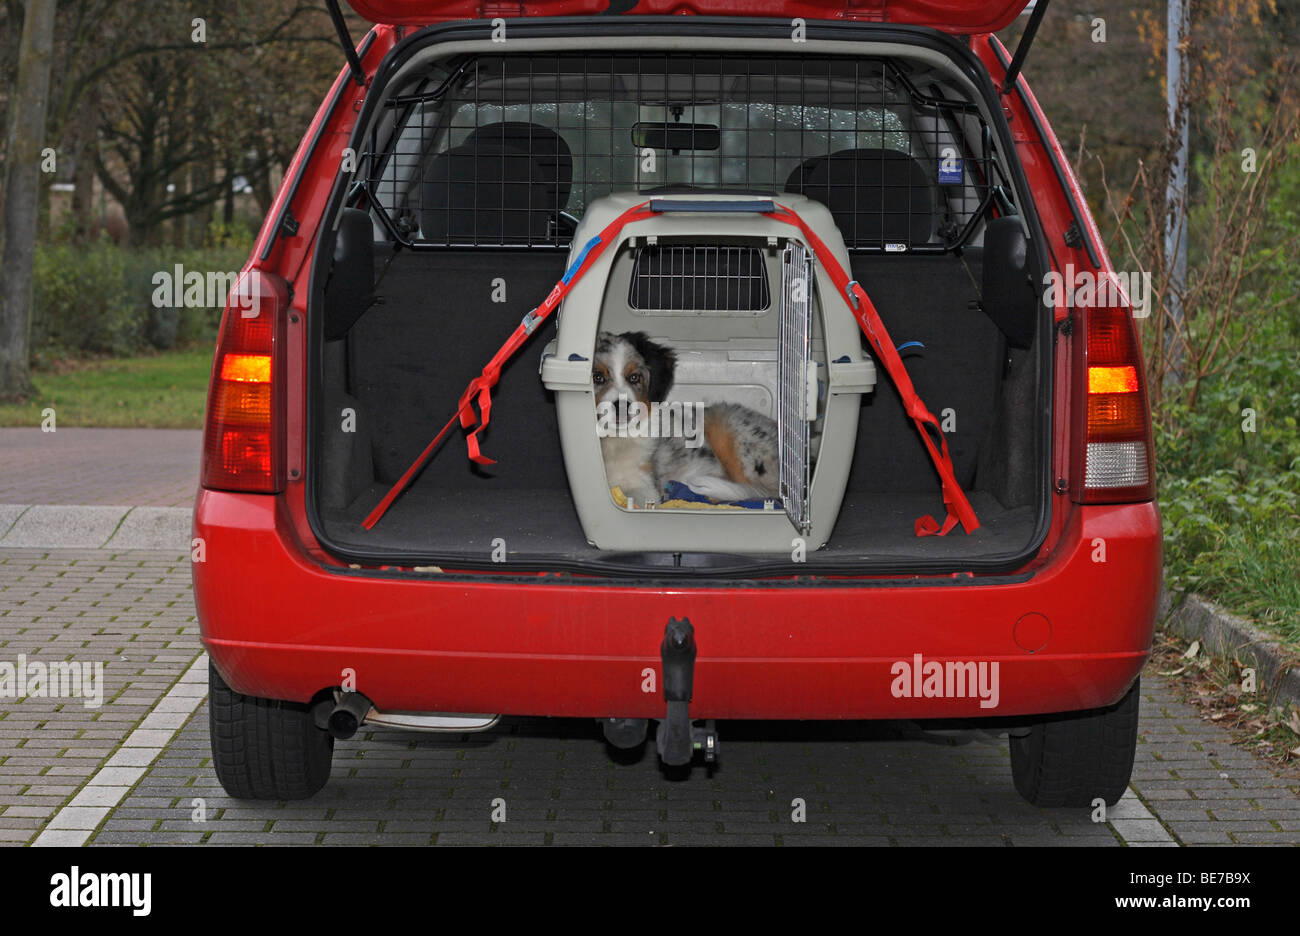 Dog crate car -Fotos und -Bildmaterial in hoher Auflösung – Alamy